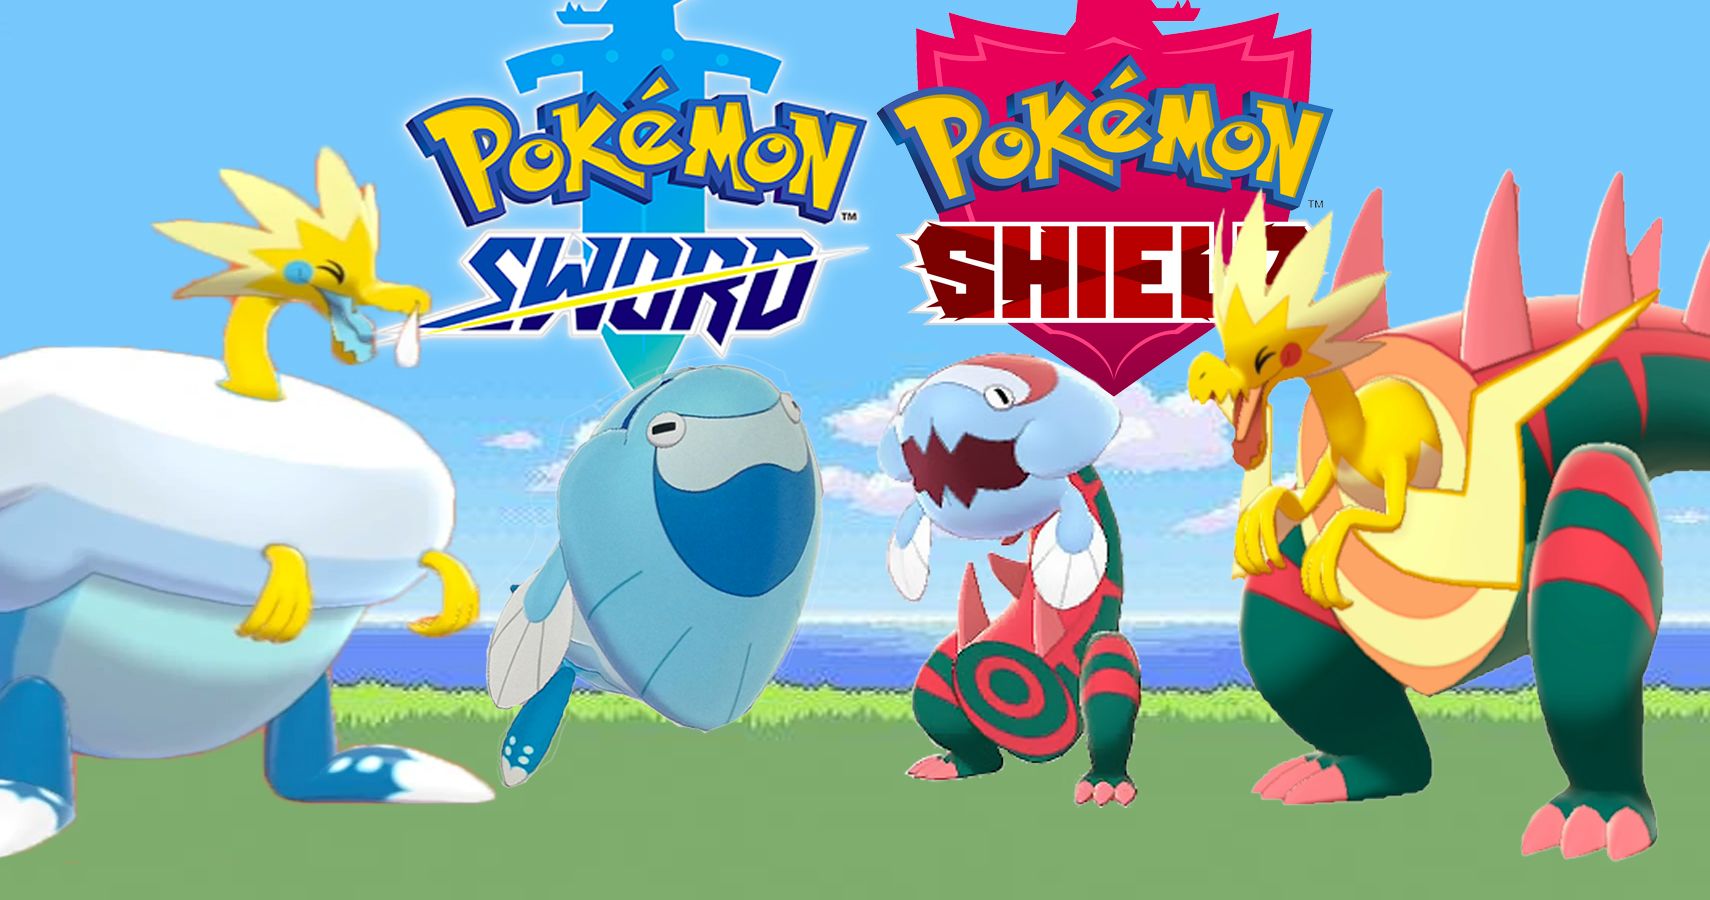 Pokémon Sword And Shield Fossil Pokémon Guide